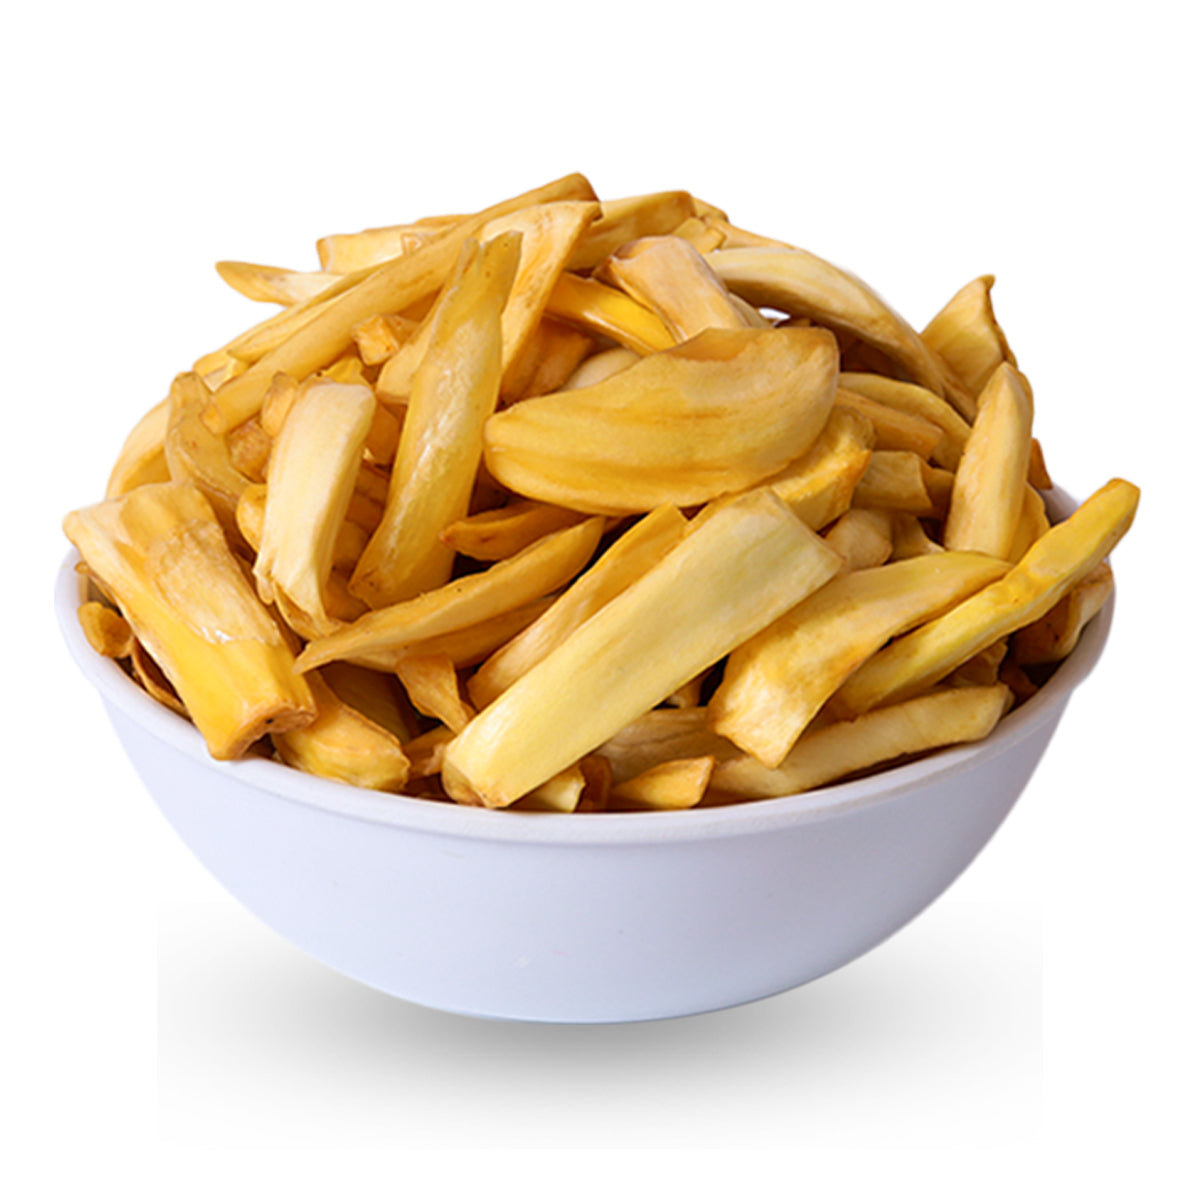 Kerala Chips Combo - Banana Chips (250g), Jackfruit Chips (250g), Jaggery Coated Banana Chips (250g), Tapioca Chips (250g) - 1kg